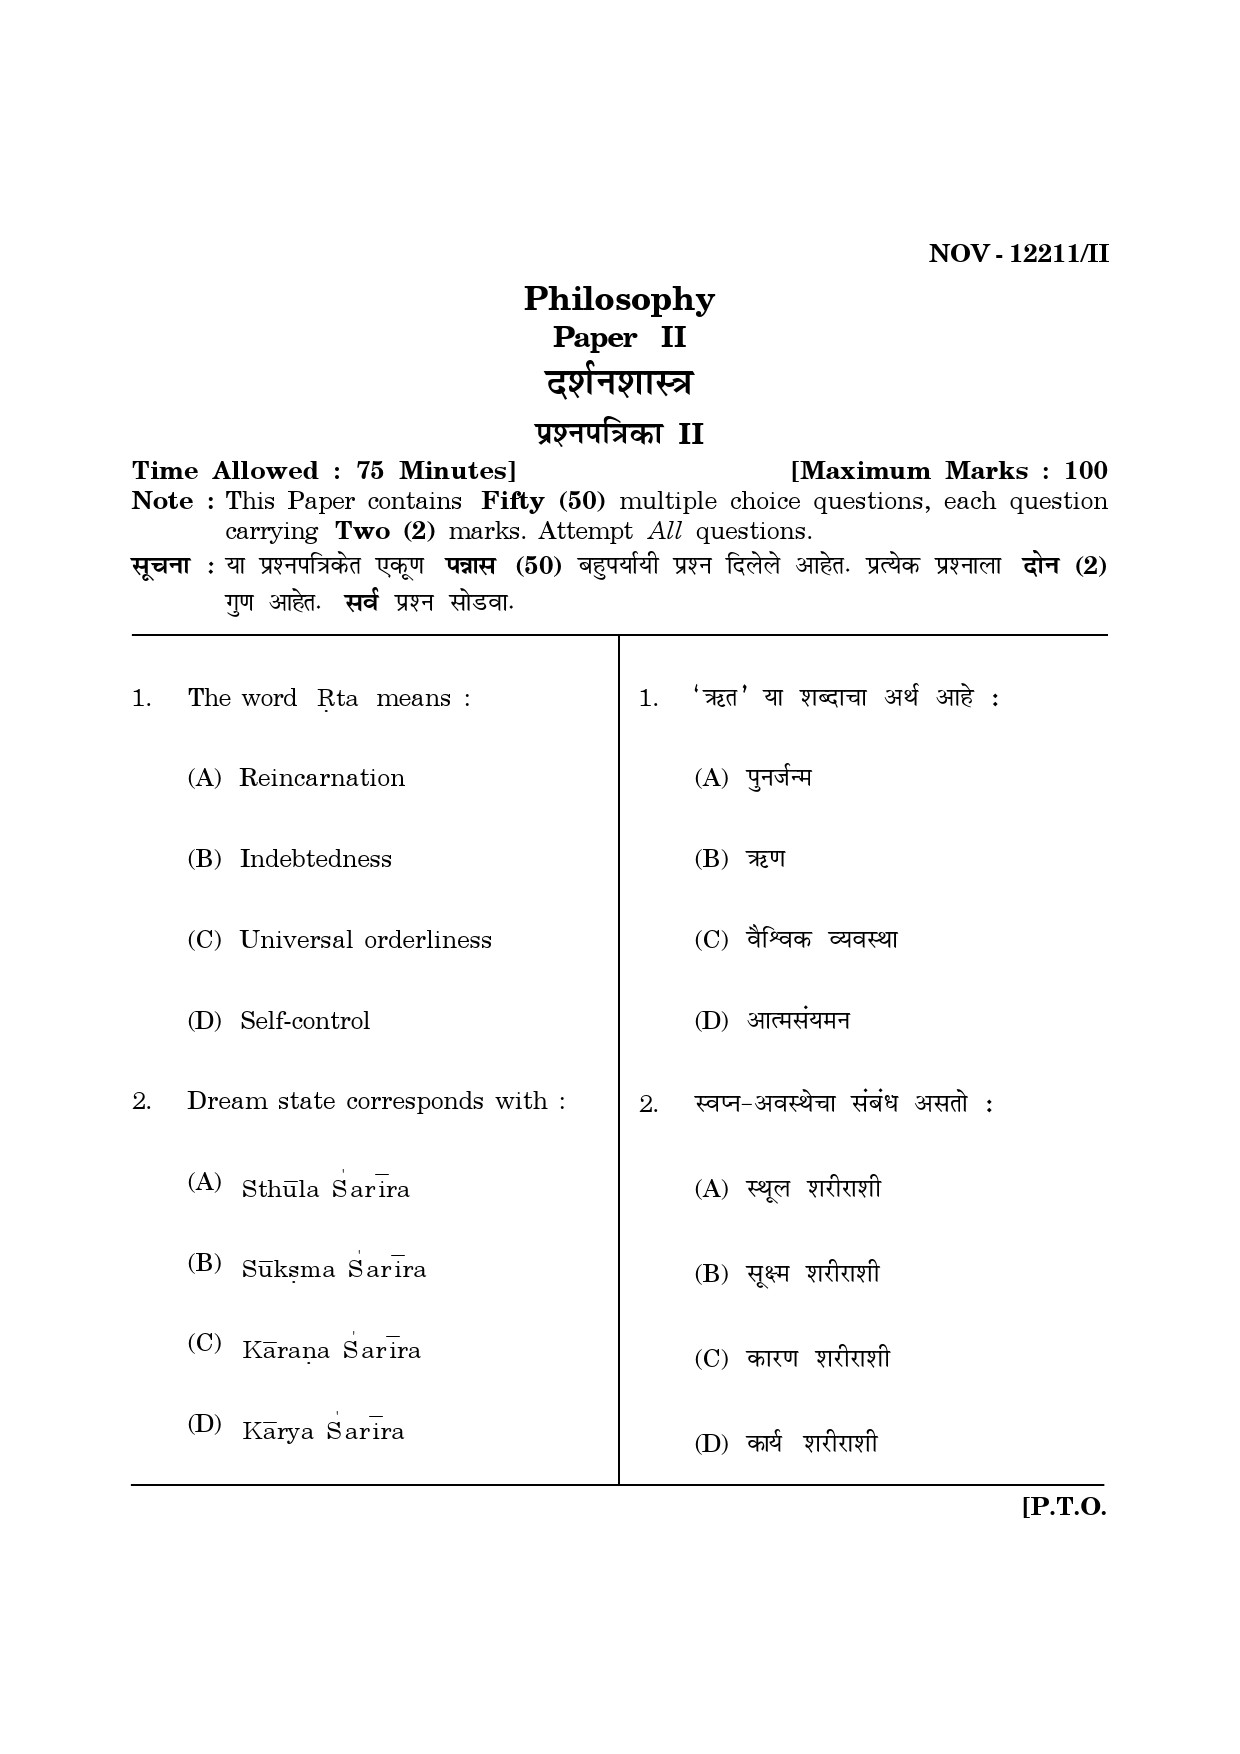 Maharashtra SET Philosophy Question Paper II November 2011 1